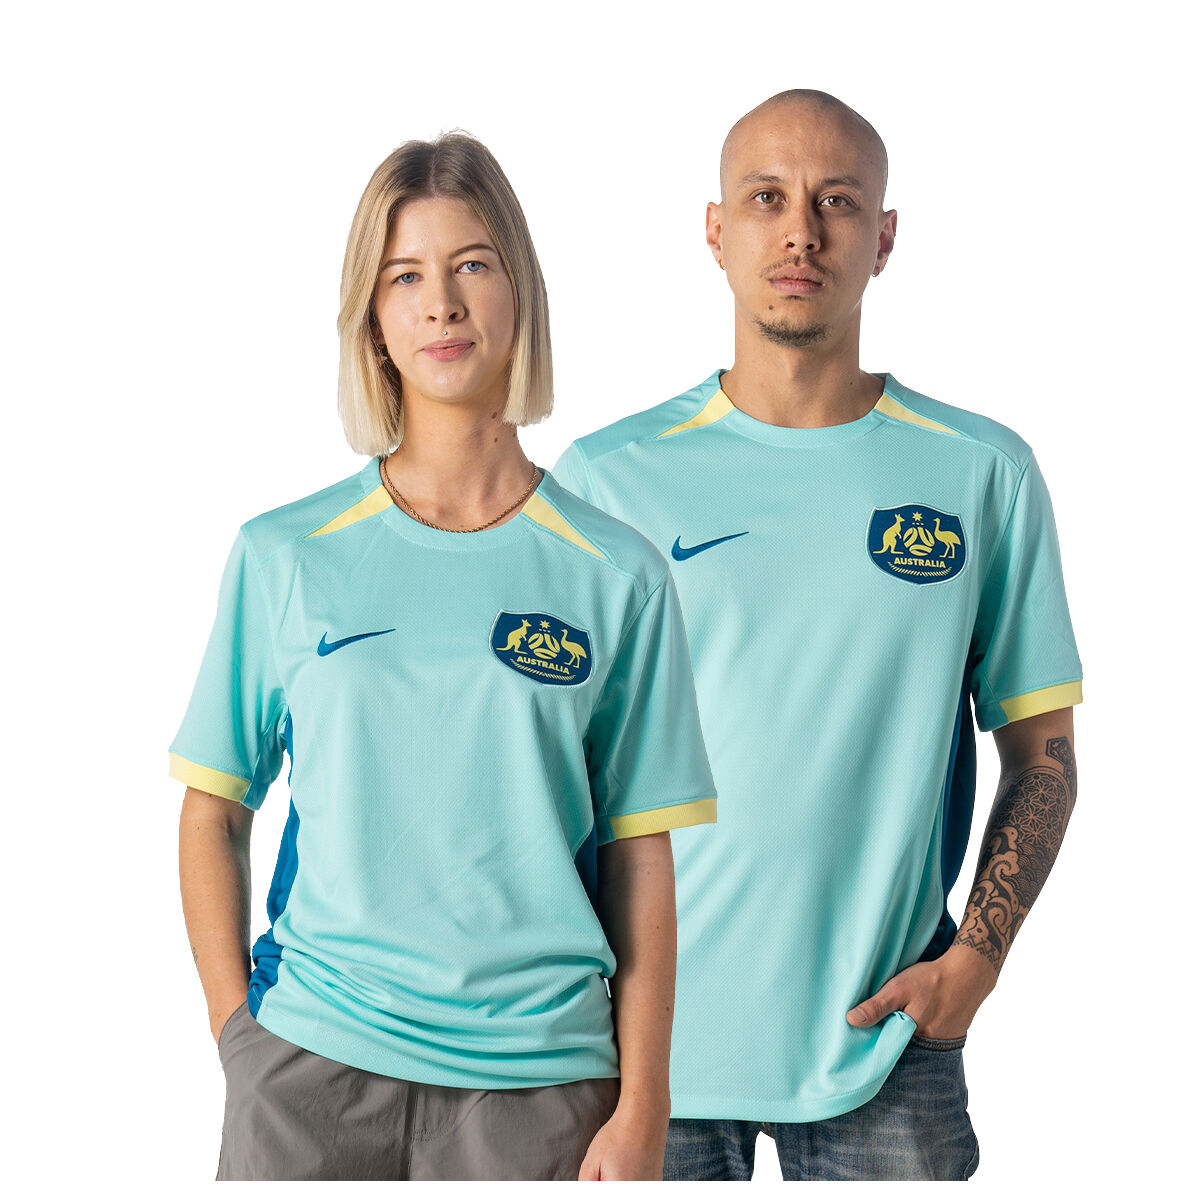 Fast And Loose T-Shirt - Vans Australia